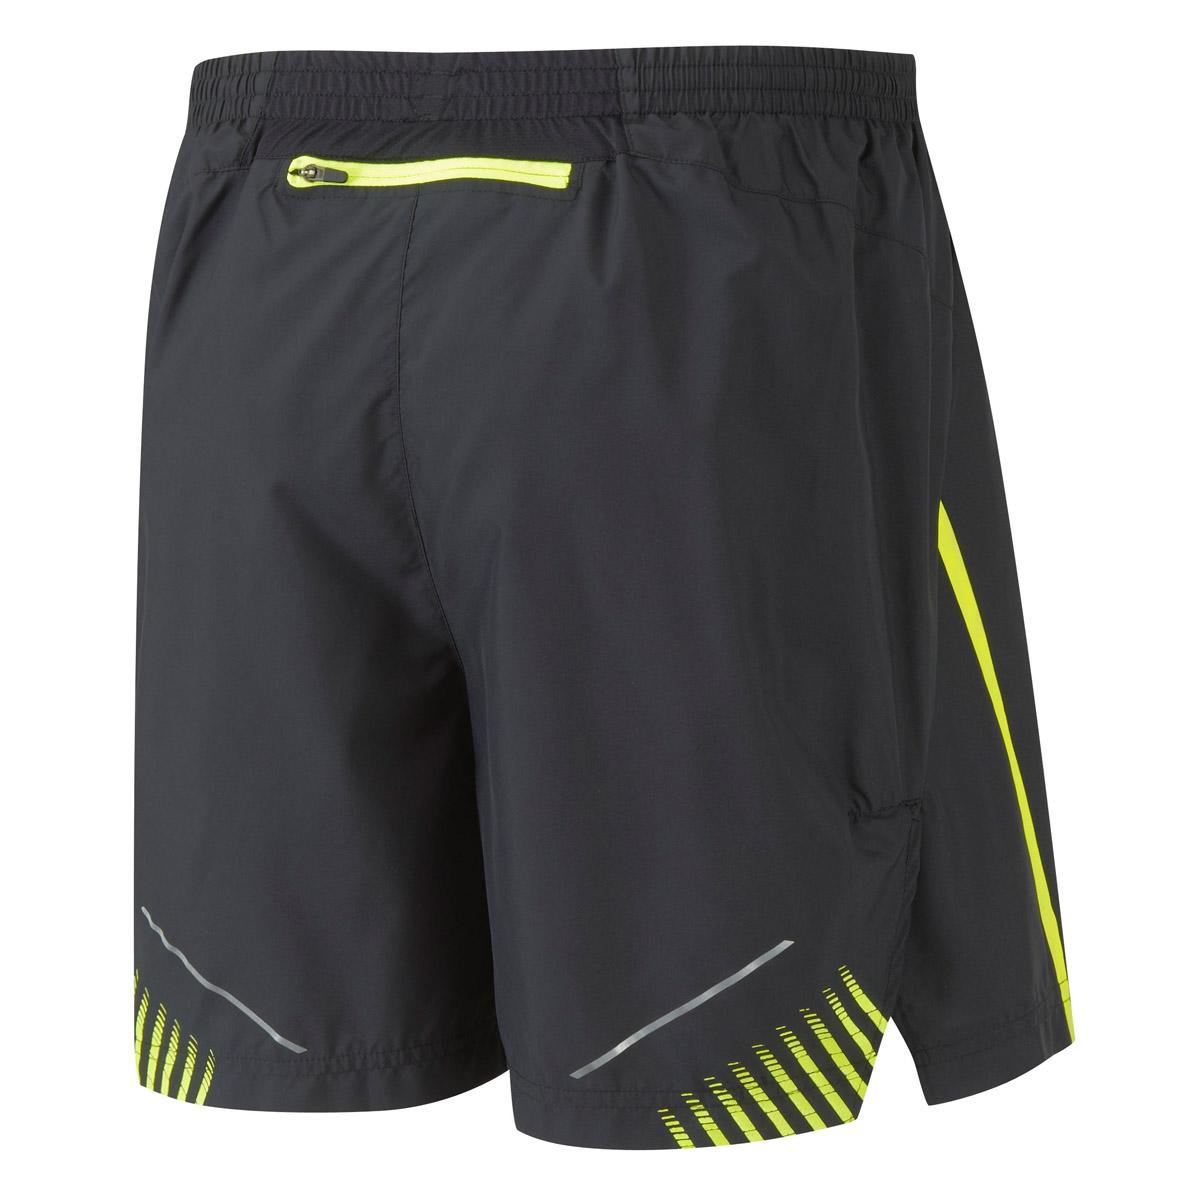 Ronhill Mens Vizion Shorts - Black/Fluo Yellow - Tennisnuts.com